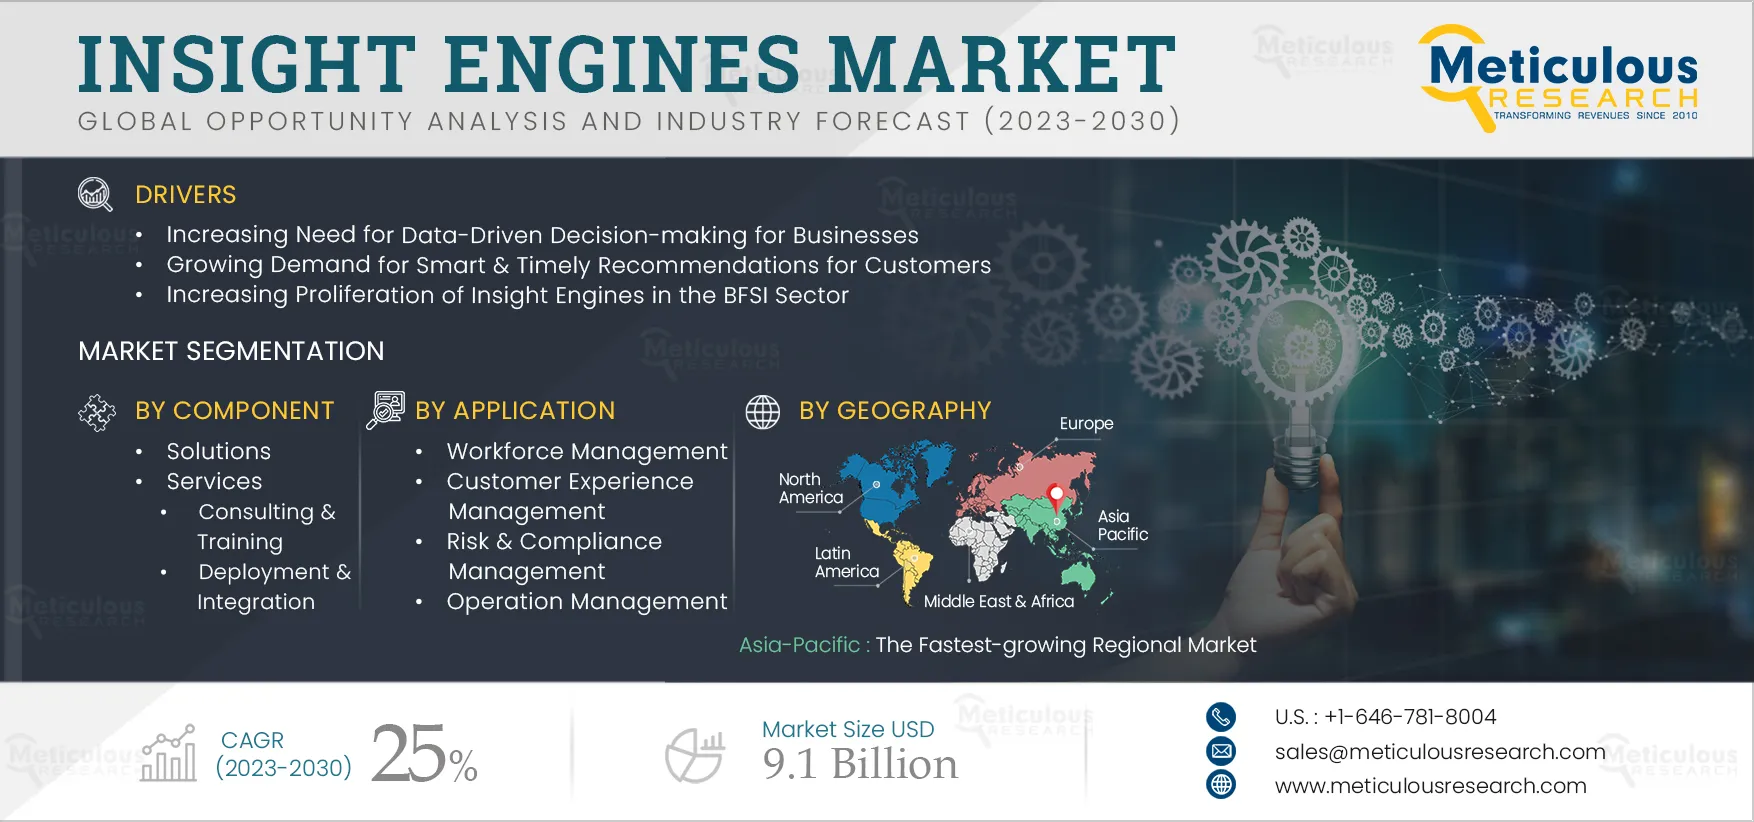 Insight Engines Market